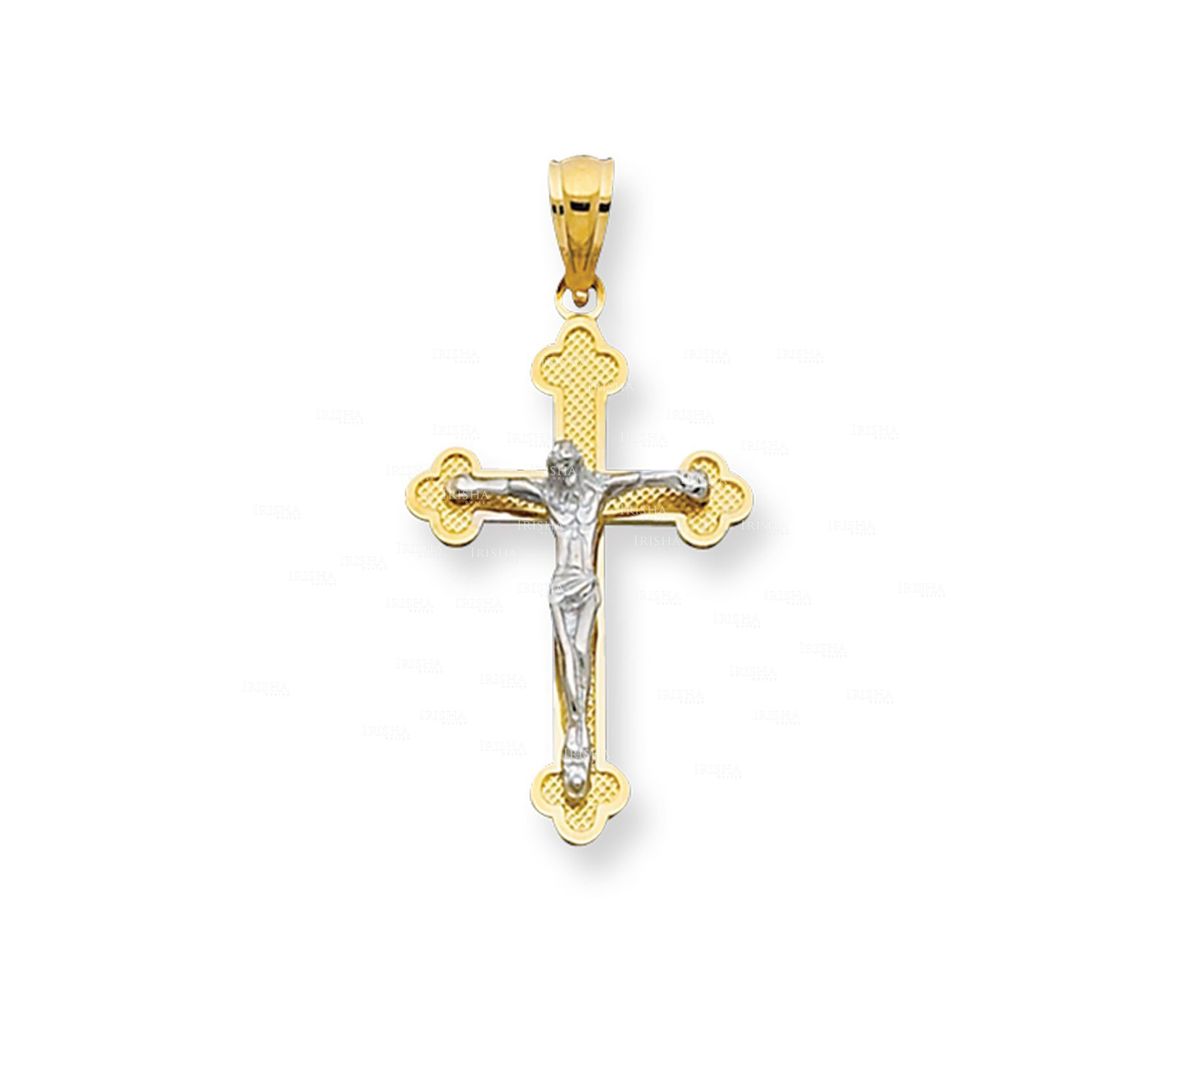 14K Yellow+White Gold Shiny Textured Cross with White Figurine Christmas Jewelry